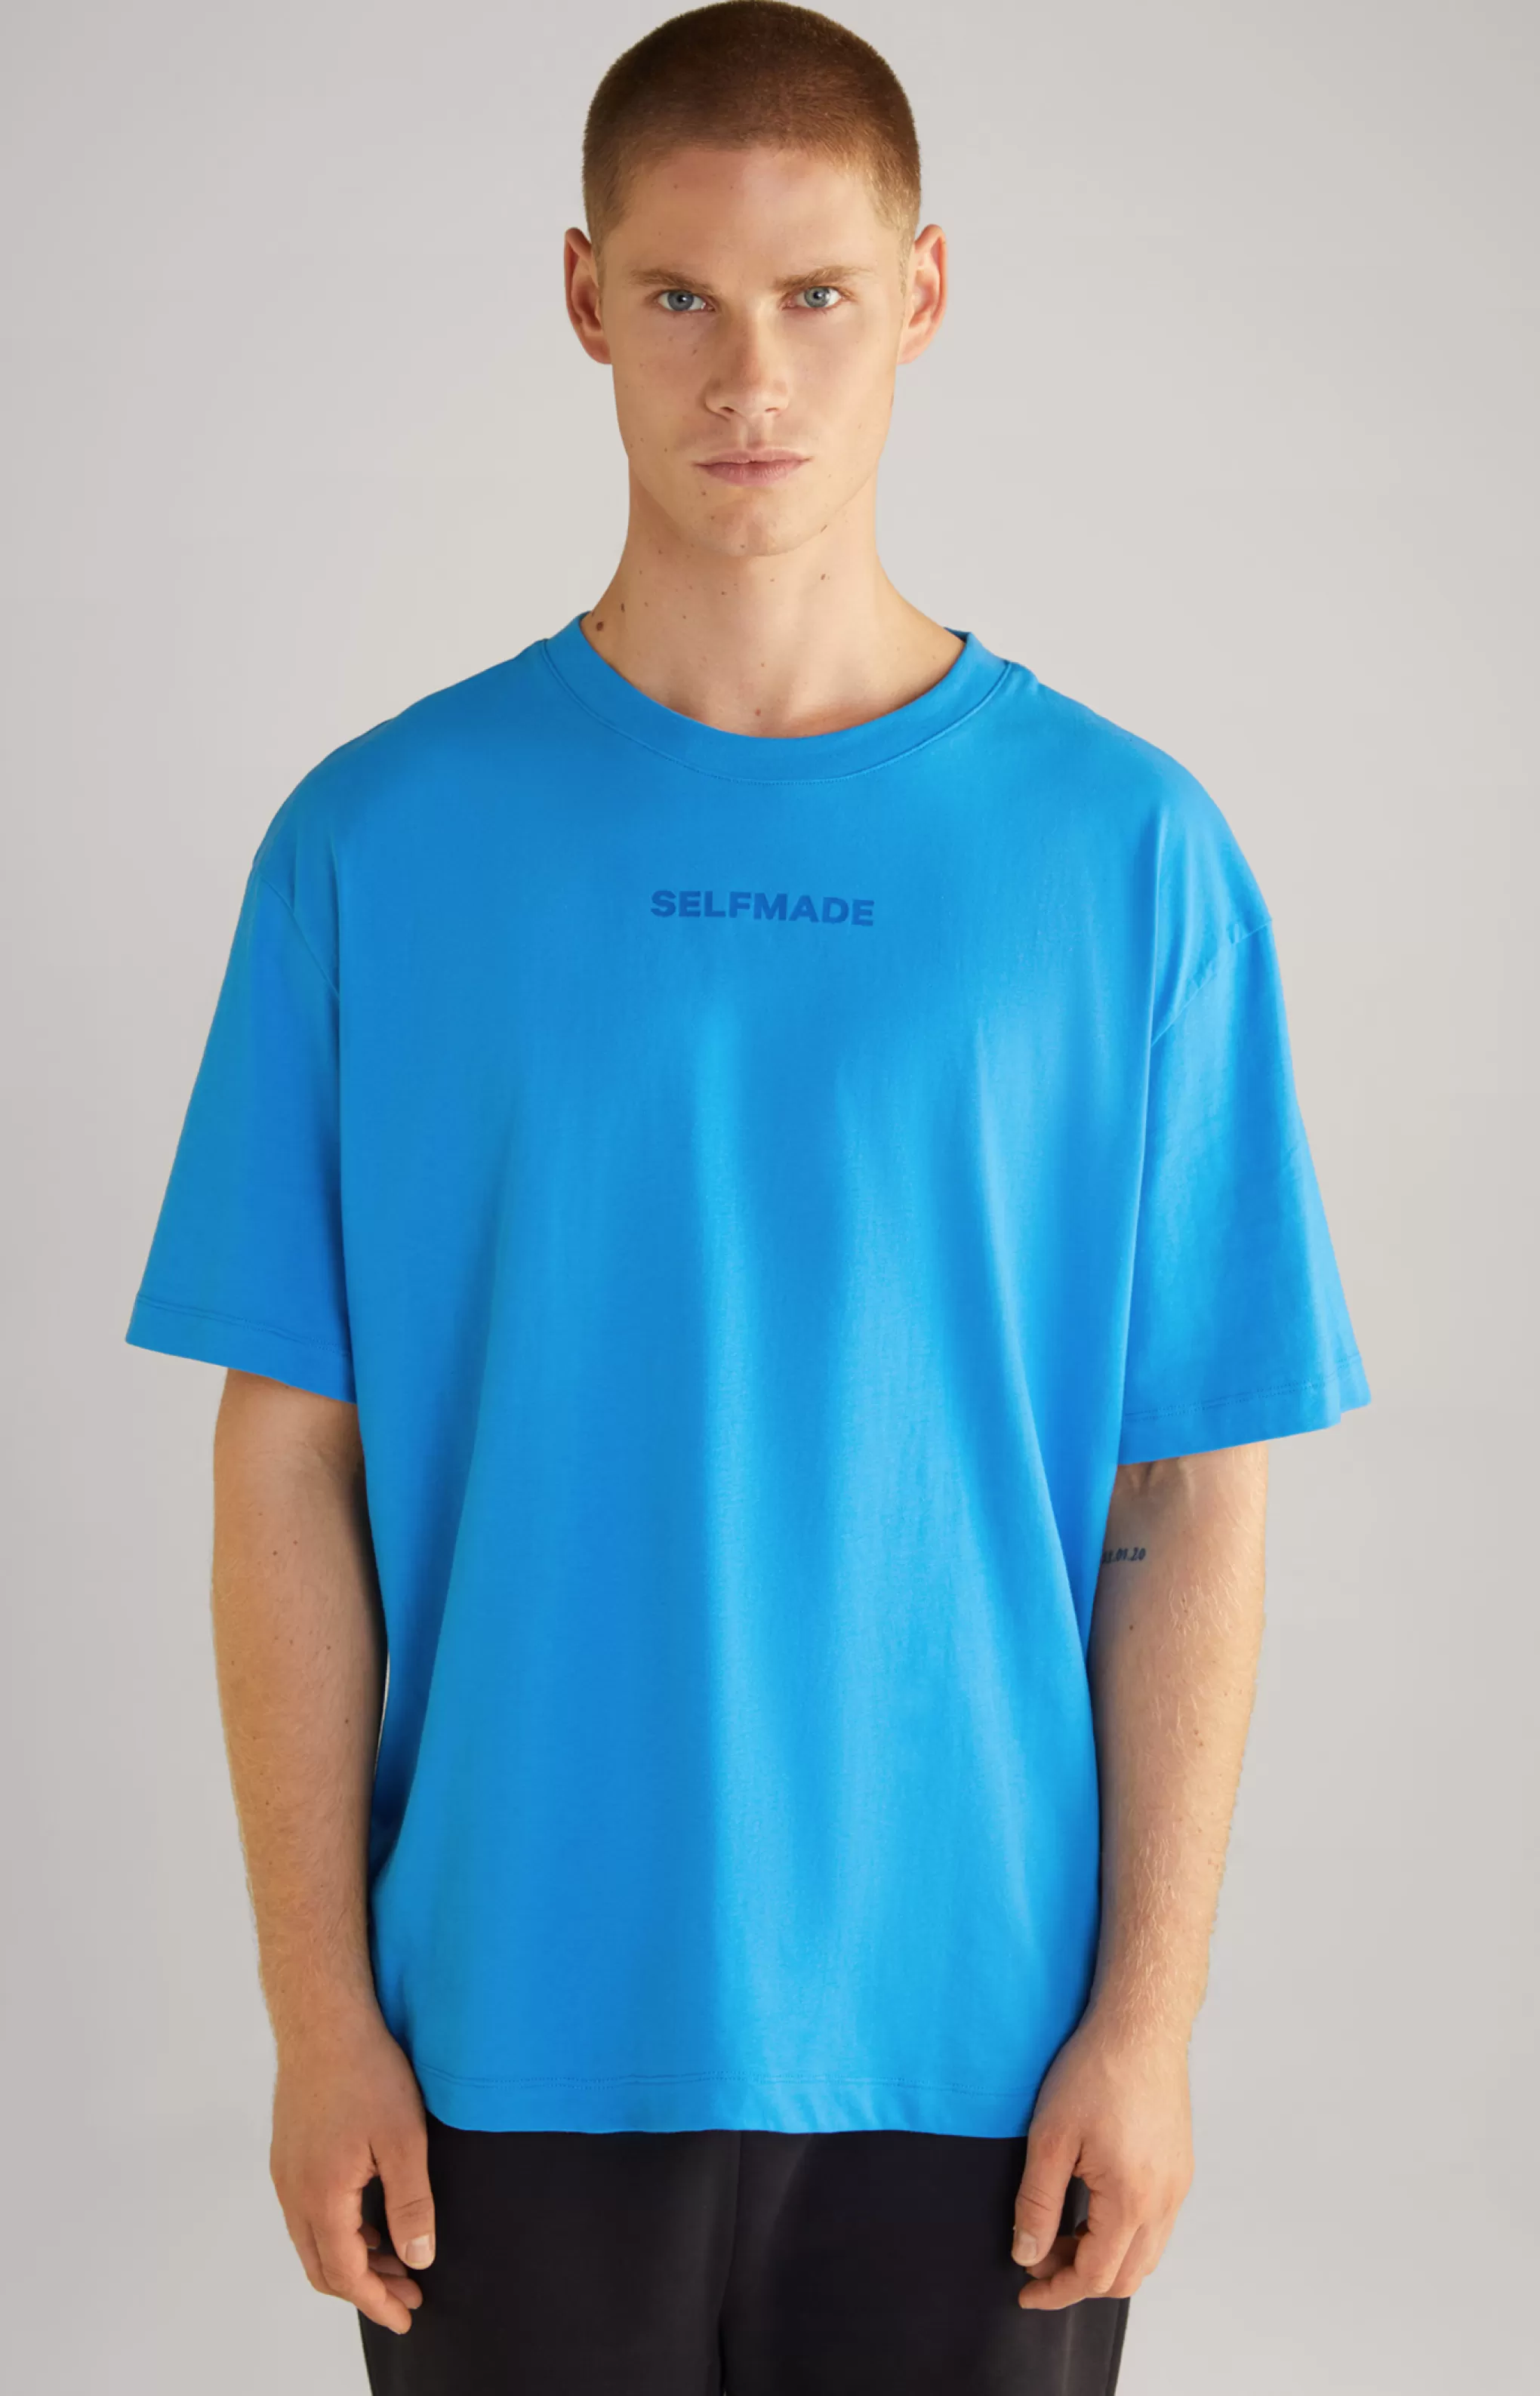 Shirts & Sweats | T-shirts*JOOP Shirts & Sweats | T-shirts Unisex Cotton T-shirt in